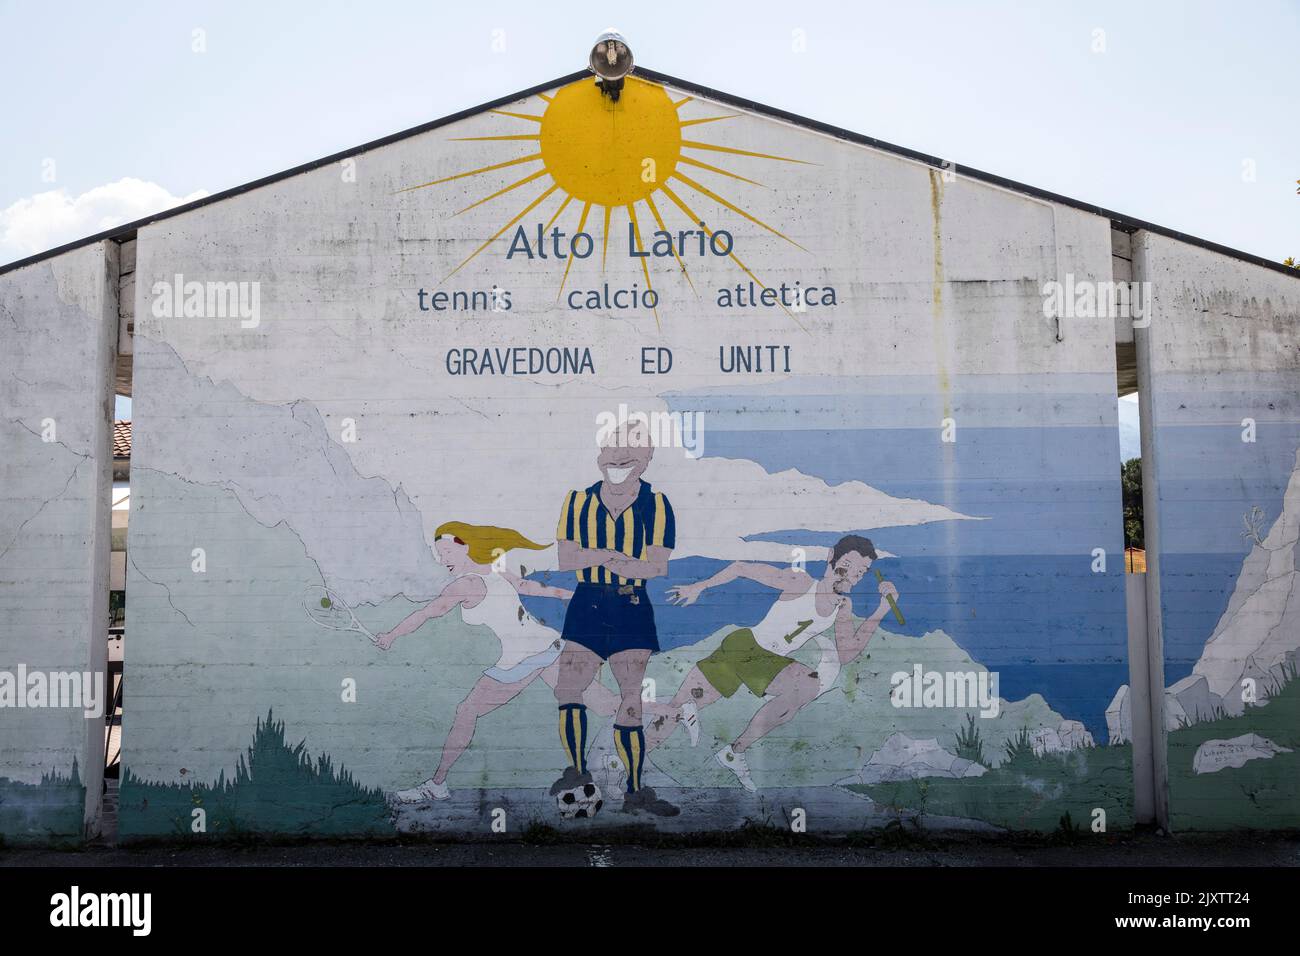 Mural advertising tennis, football and athletics in Gravedona, Italy. Stock Photo